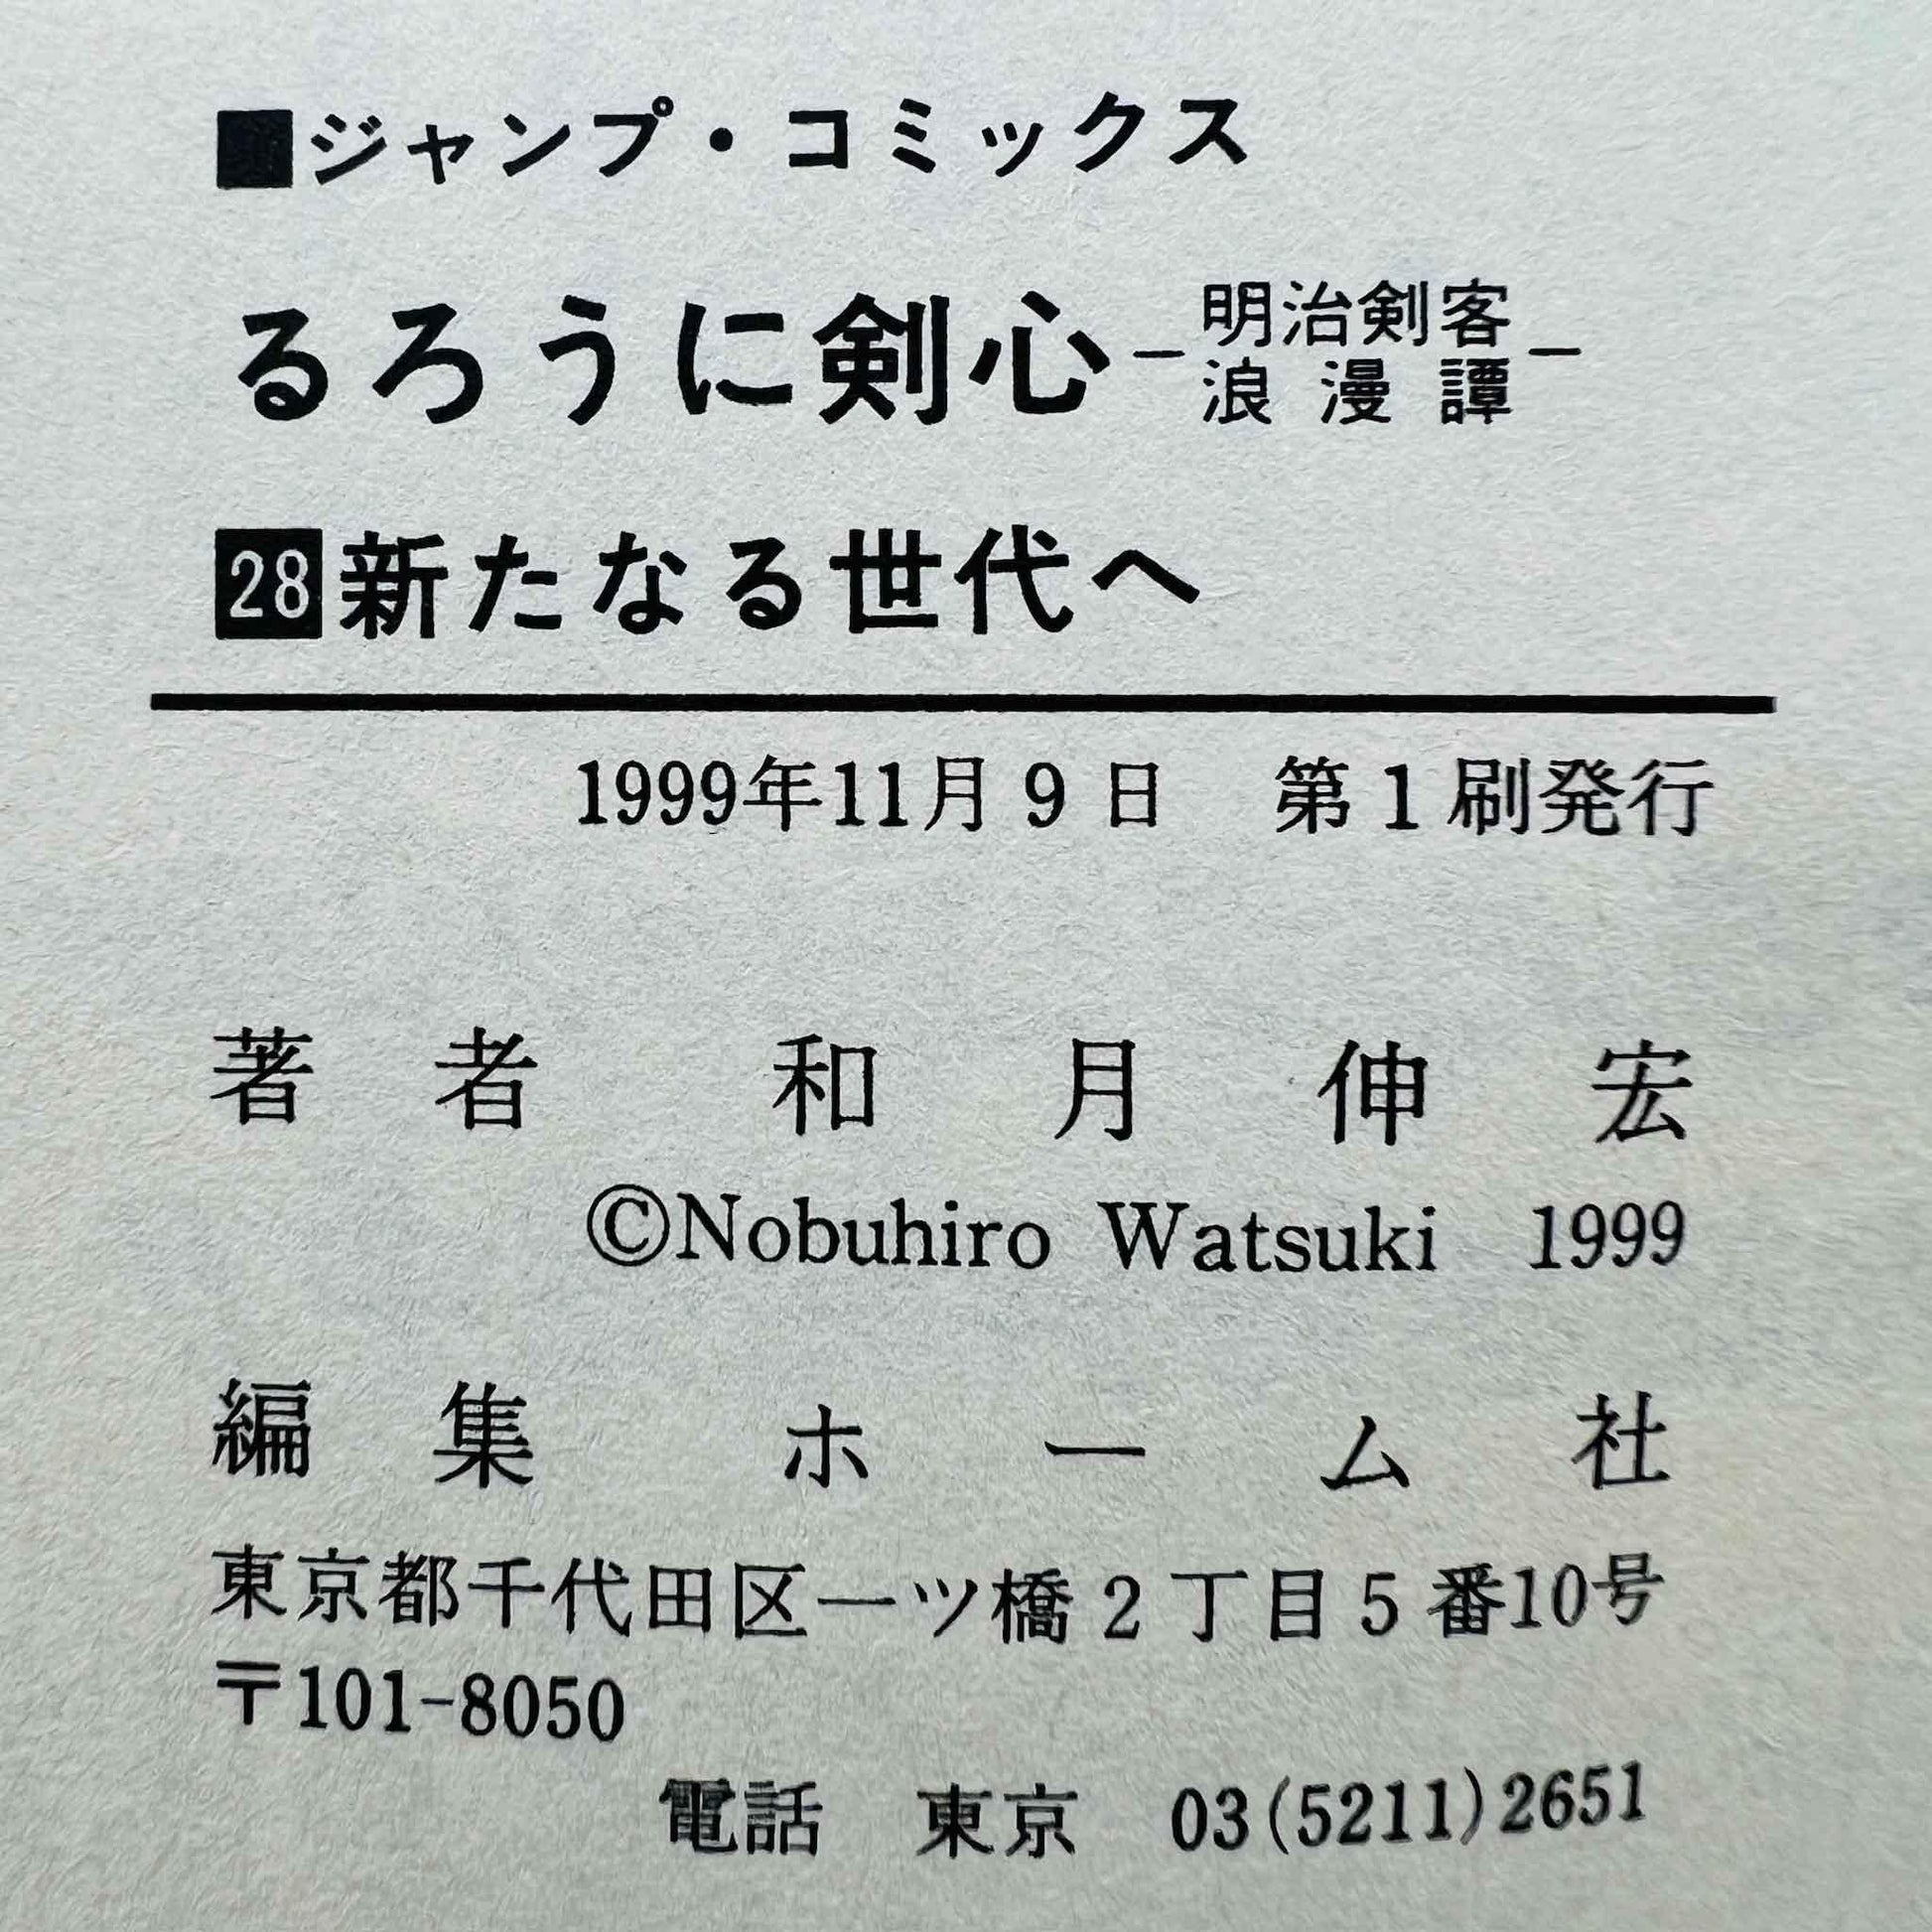 Rurouni Kenshin - Volume 28 - 1stPrint.net - 1st First Print Edition Manga Store - M-KENSH-28-001